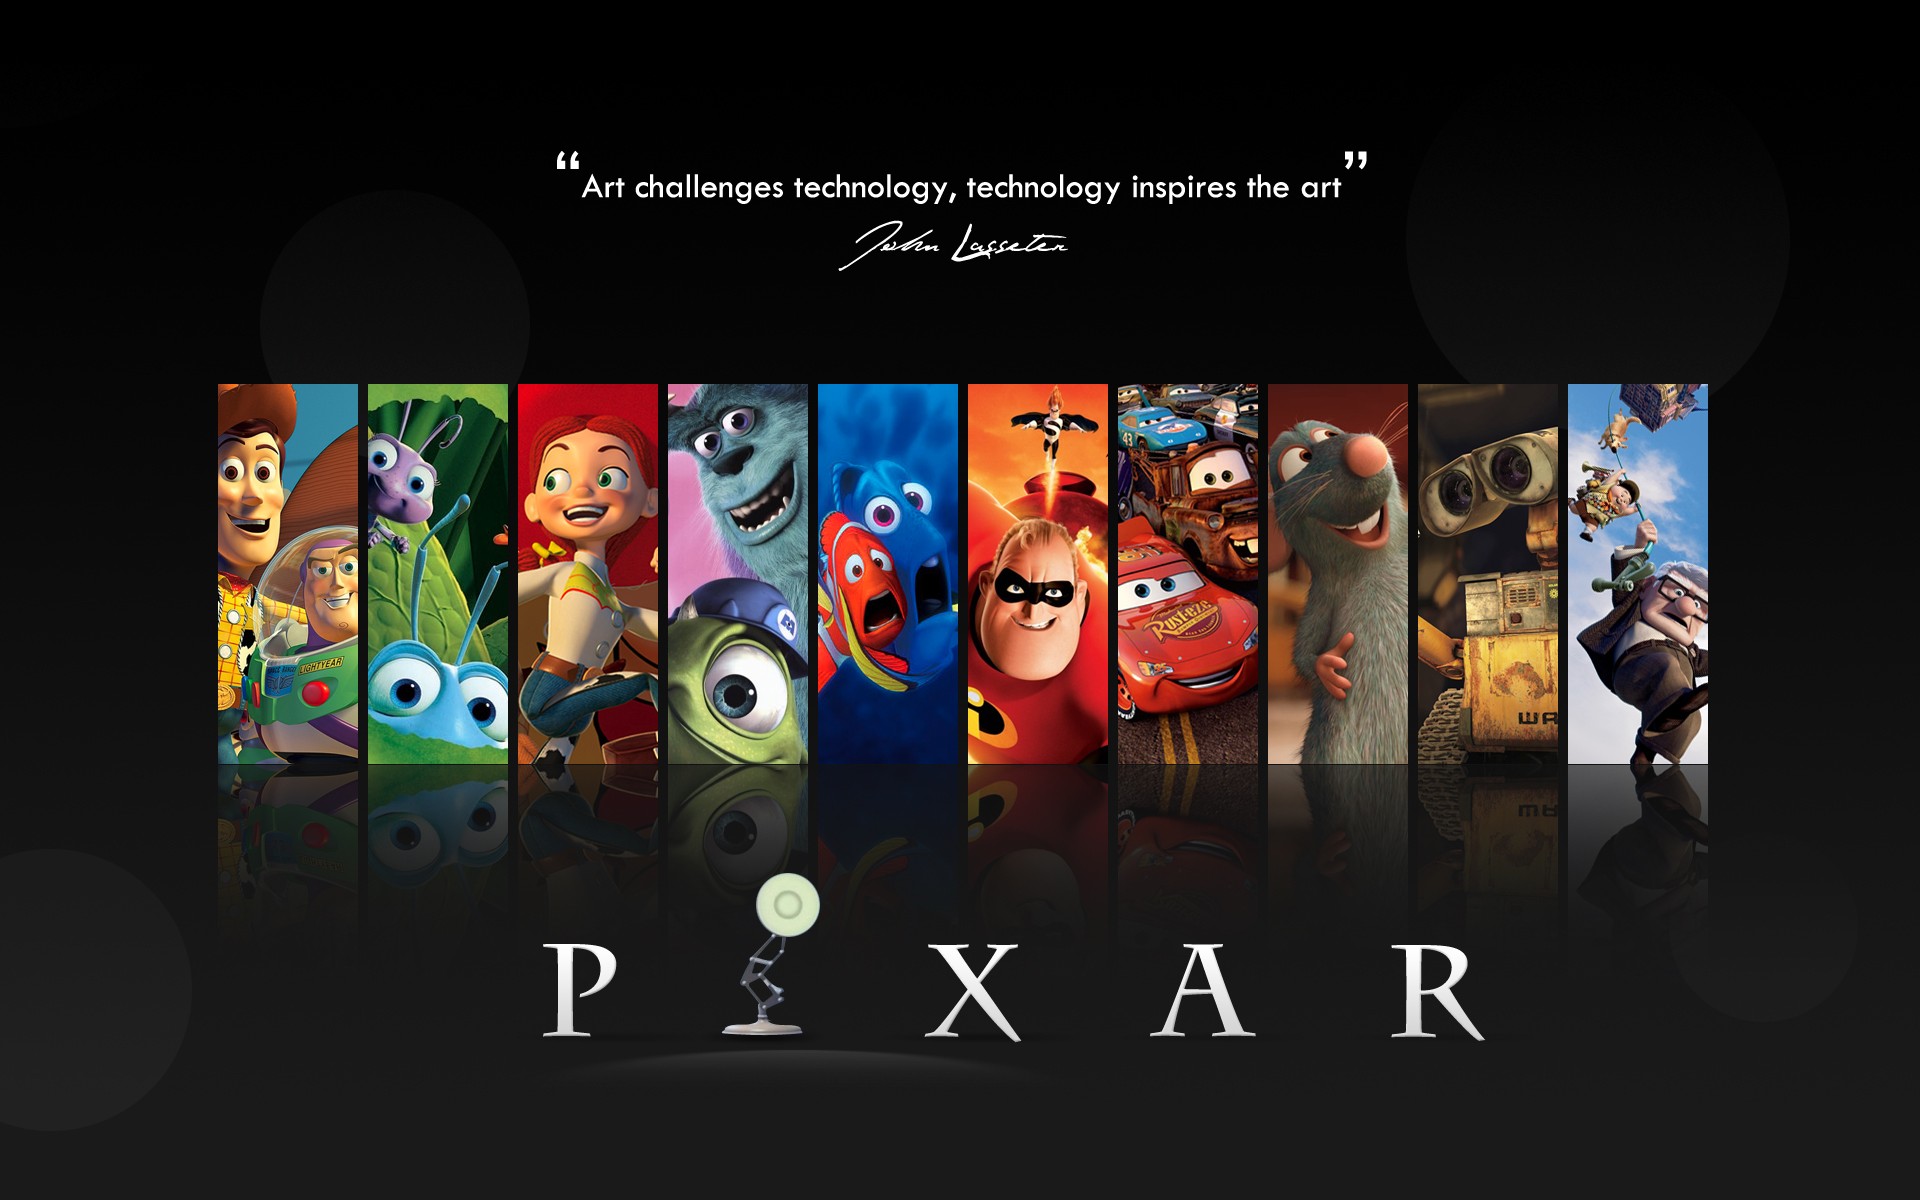 General 1920x1200 Disney Pixar Pixar Animation Studios movies animated movies collage